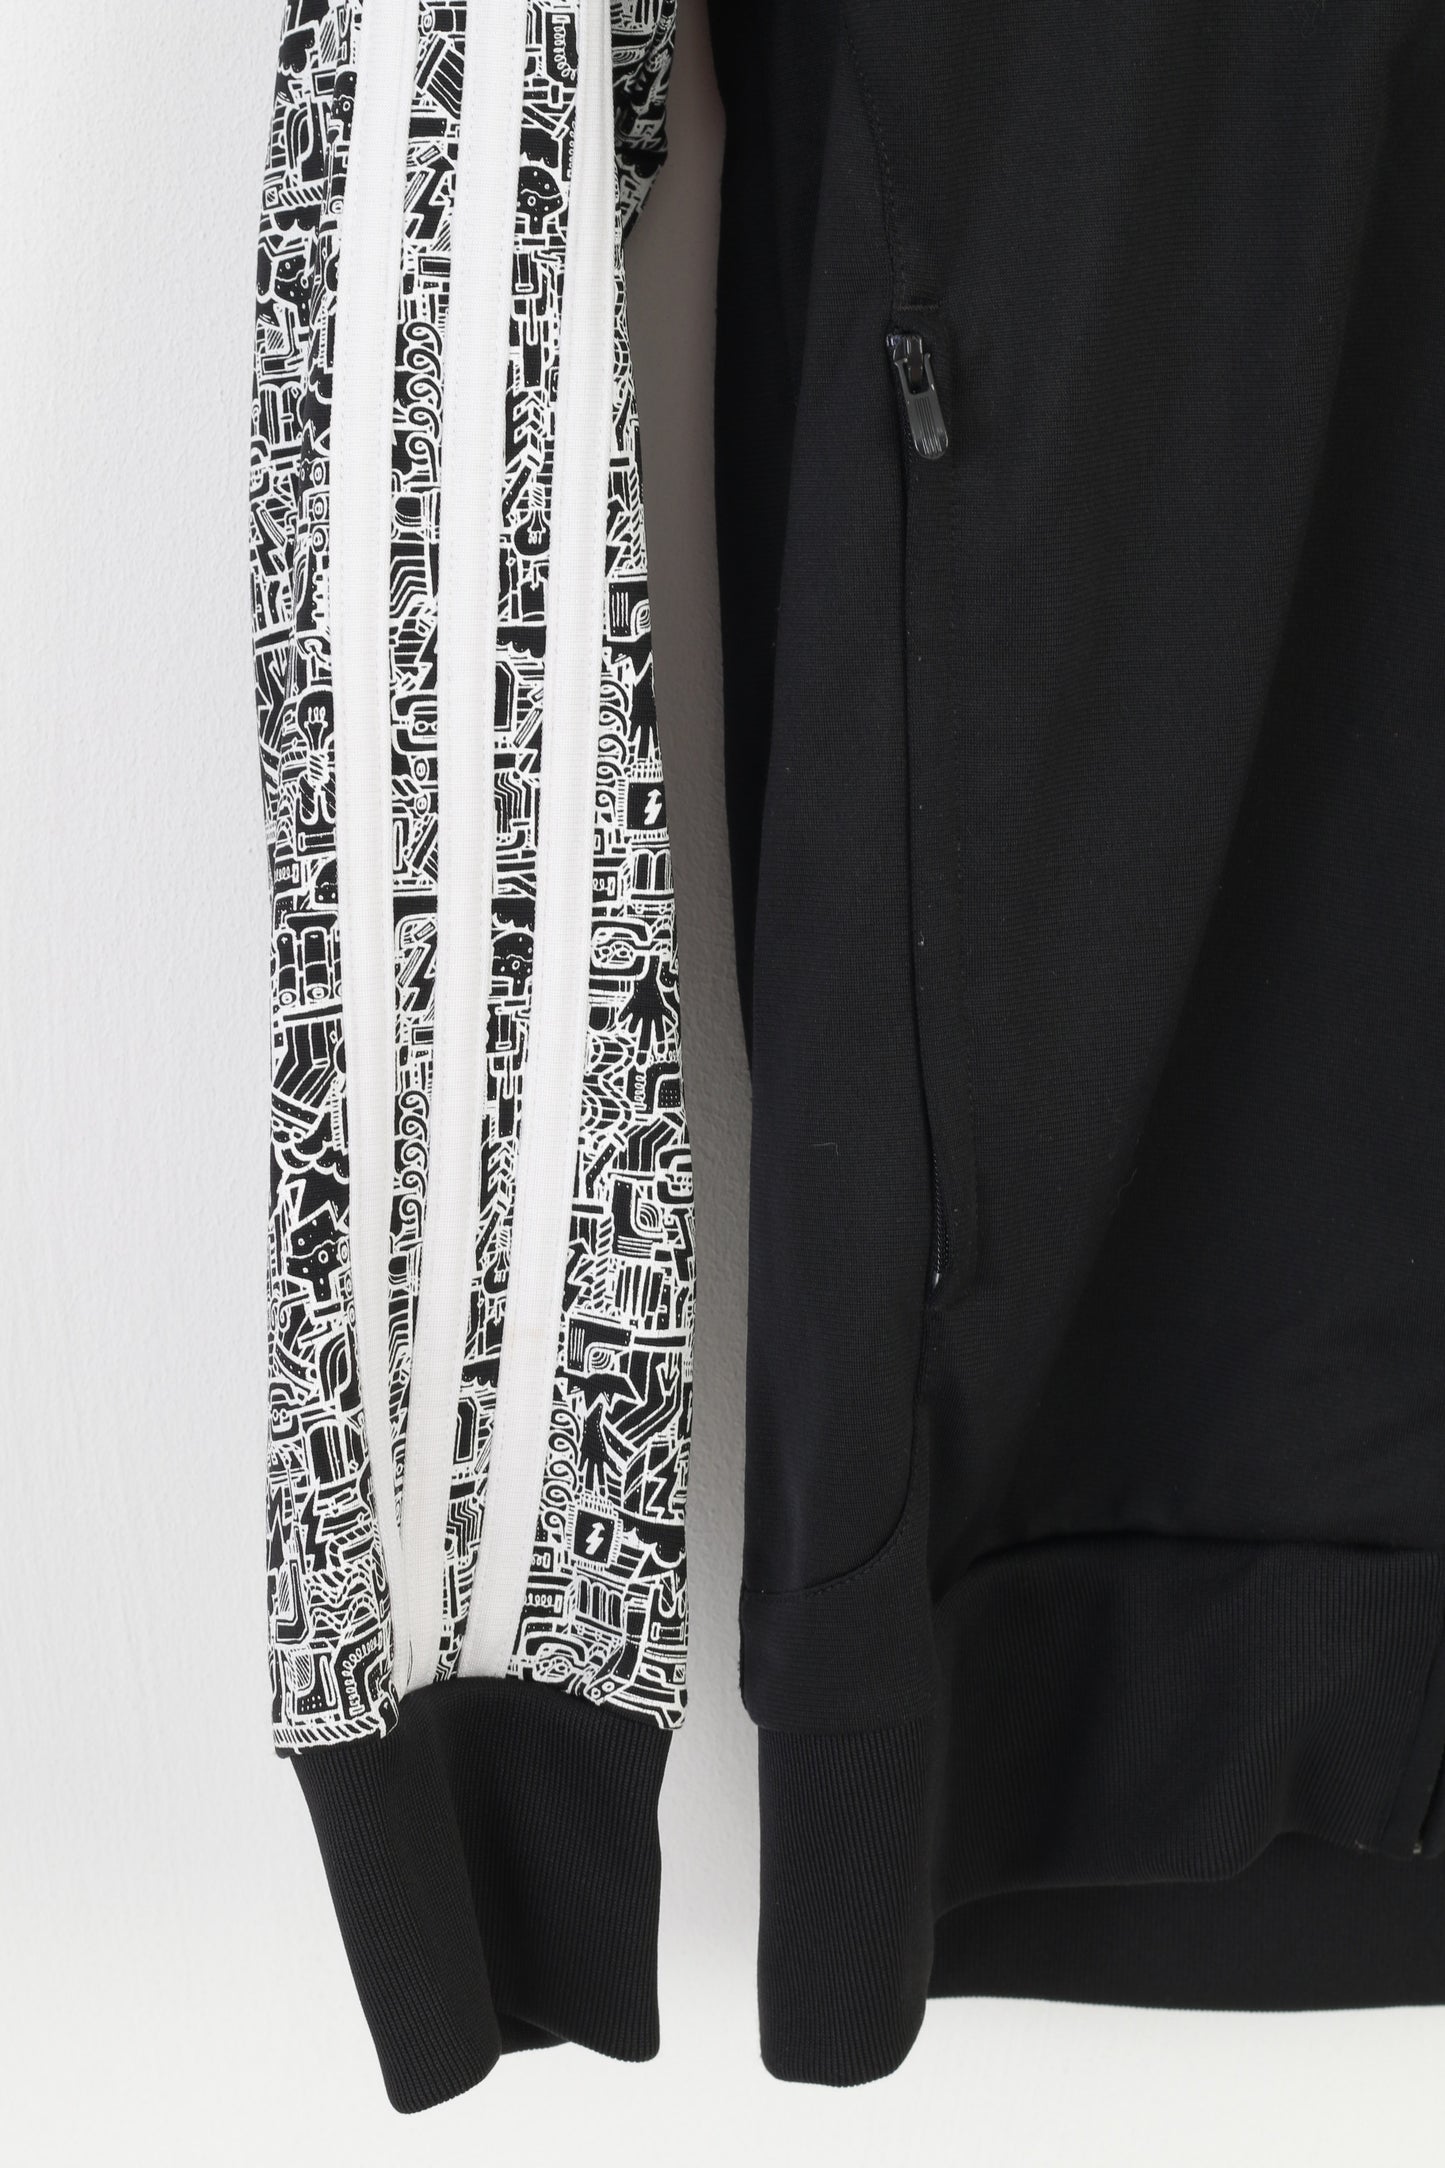 Adidas Men S Sweatshirt Full Zipper Black Collar  Sport Training Graphic Vintage Top